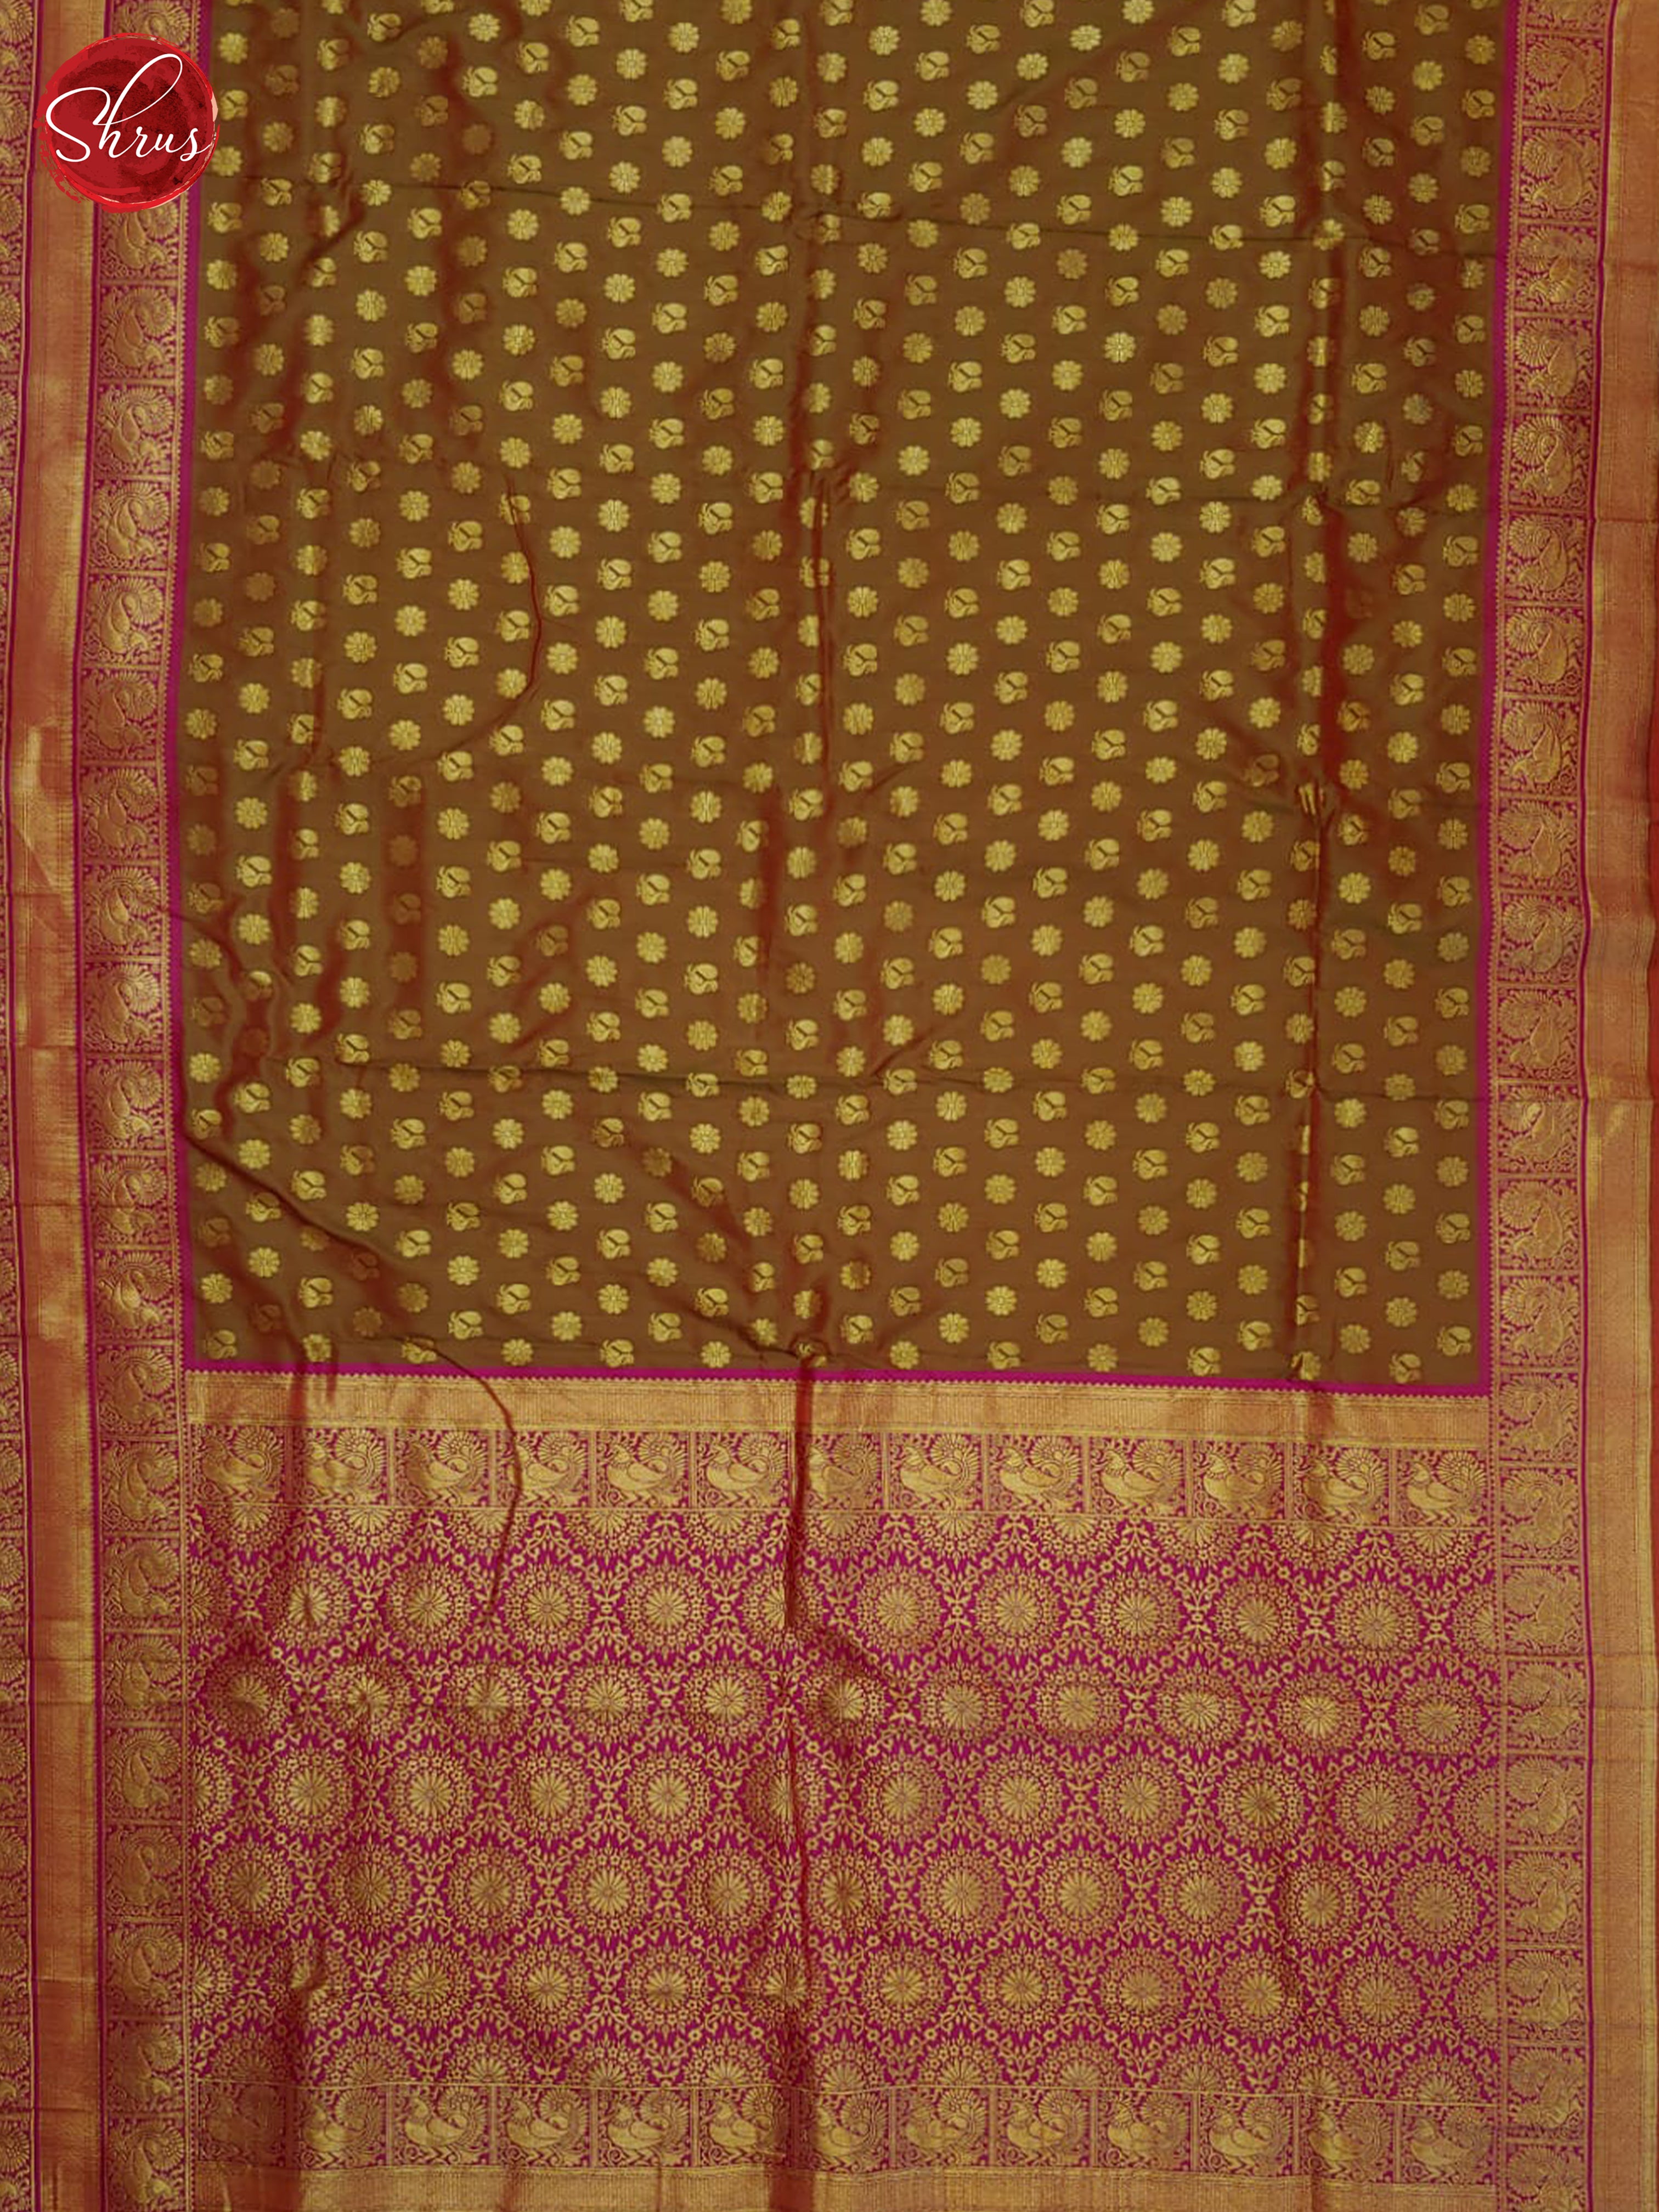 Double Shaded Brownish Green & Red  - Semi kanchipuram saree - Shop on ShrusEternity.com